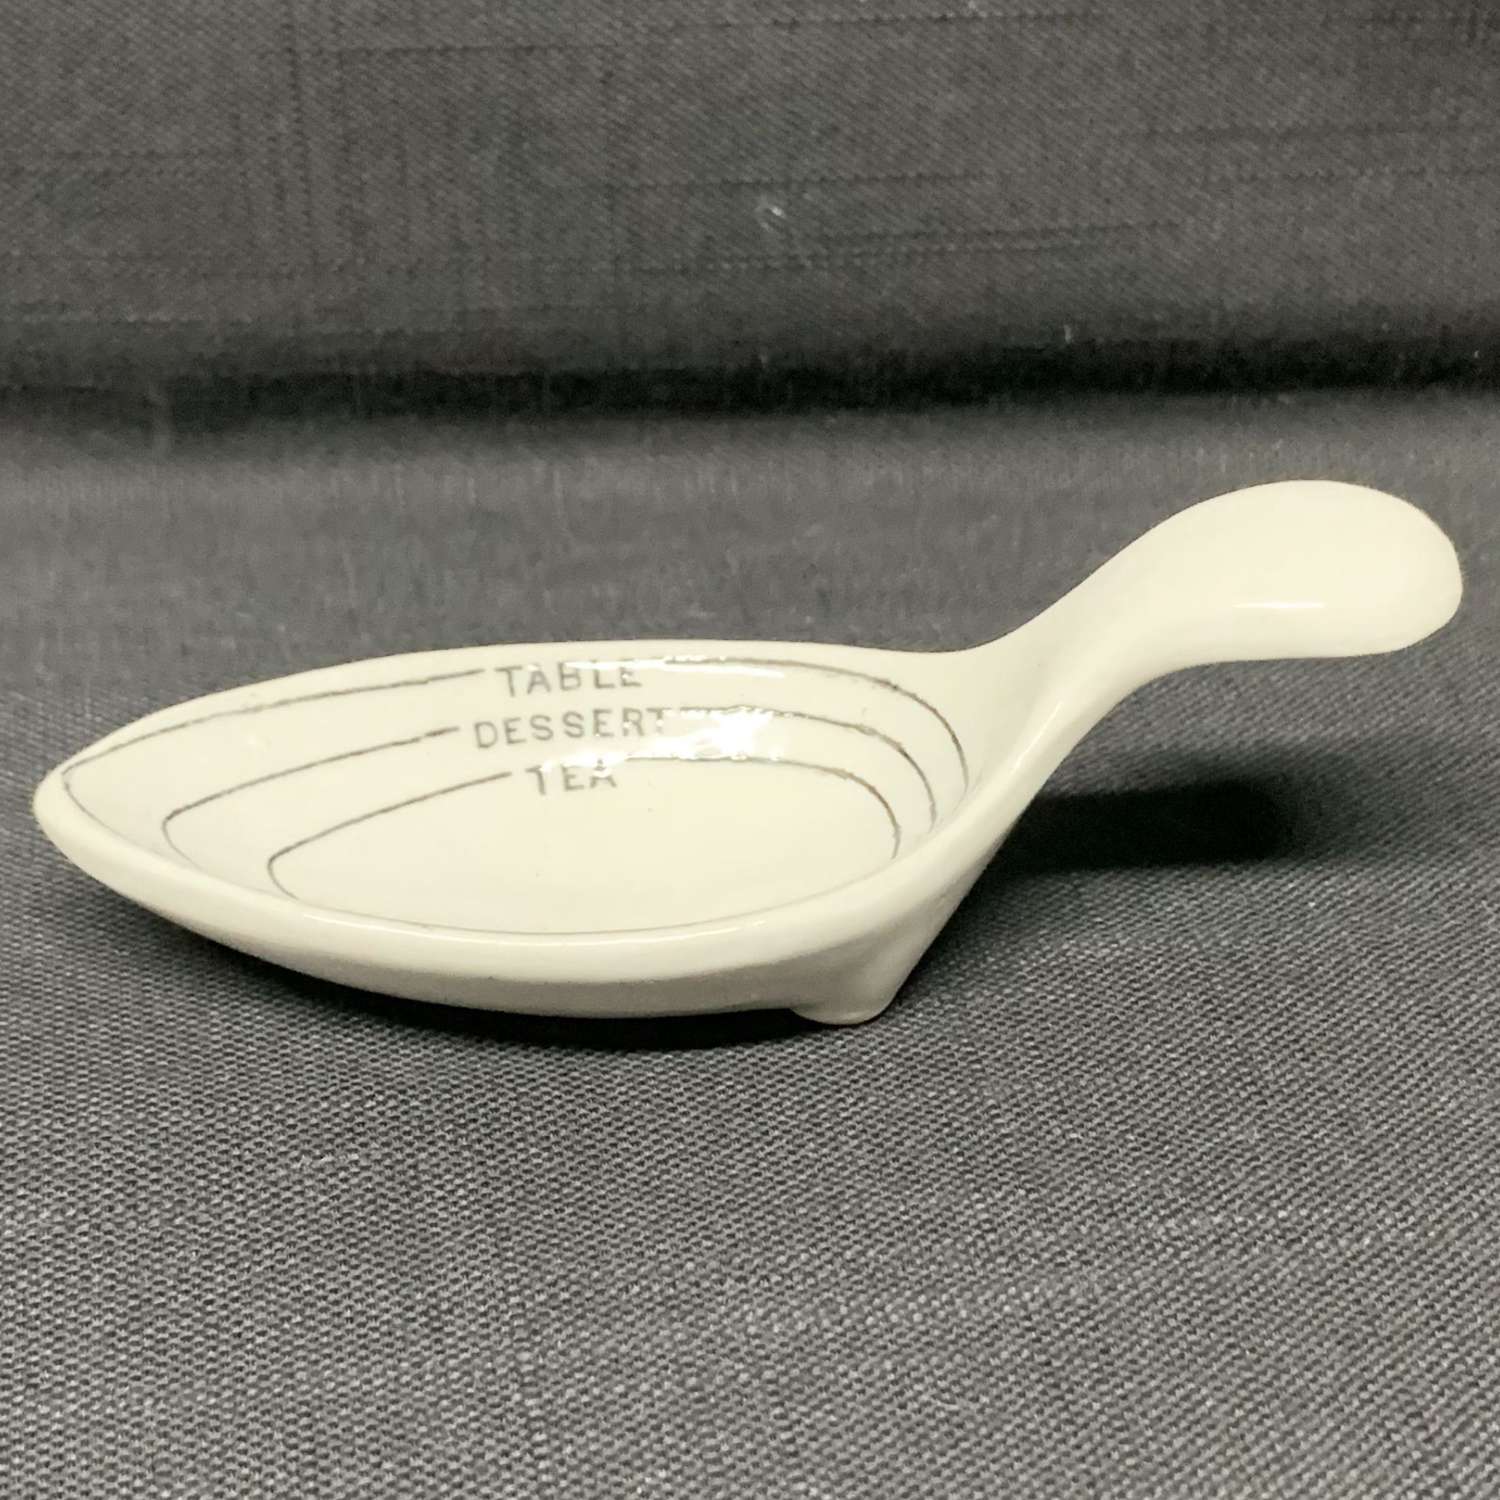 Early Measuring Spoon Ironstone Earthenware  Kitchenalia  1880